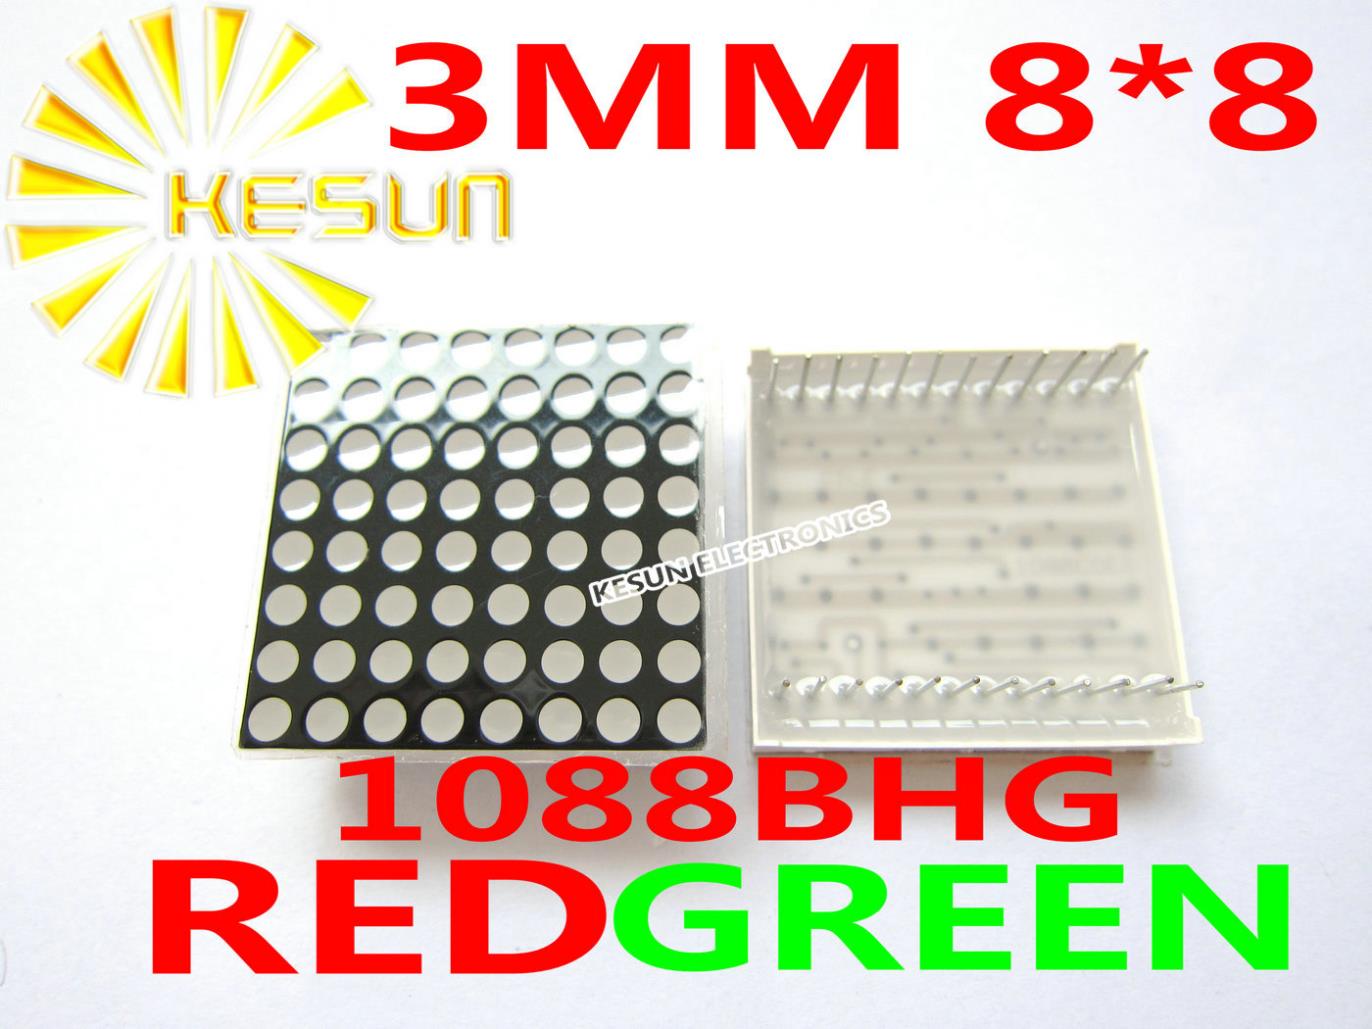 50PCS x 3ММ 8X8 Црвена Зелена bi-боја Заеднички Анодна 32*32 LED Dot Matrix Дигитални Цевка Модул 1088BHG LED Дисплеј